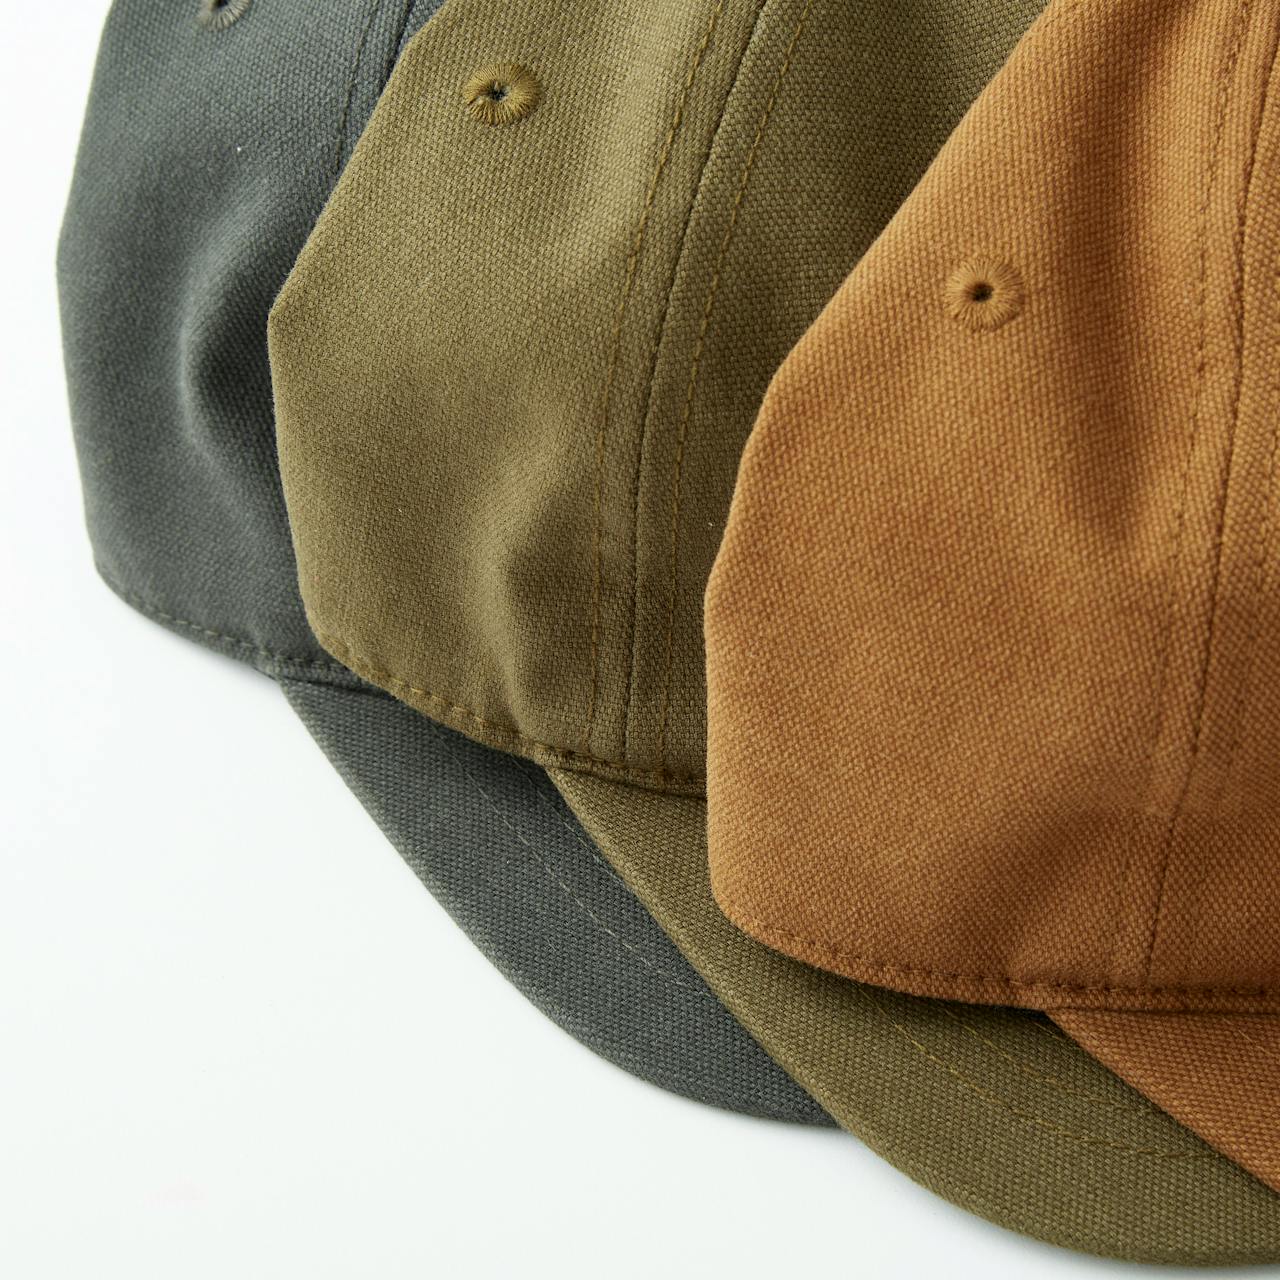 Huckberry Proof Men's Rover Hat, Polyester Sweatband to Wick Away Moisture